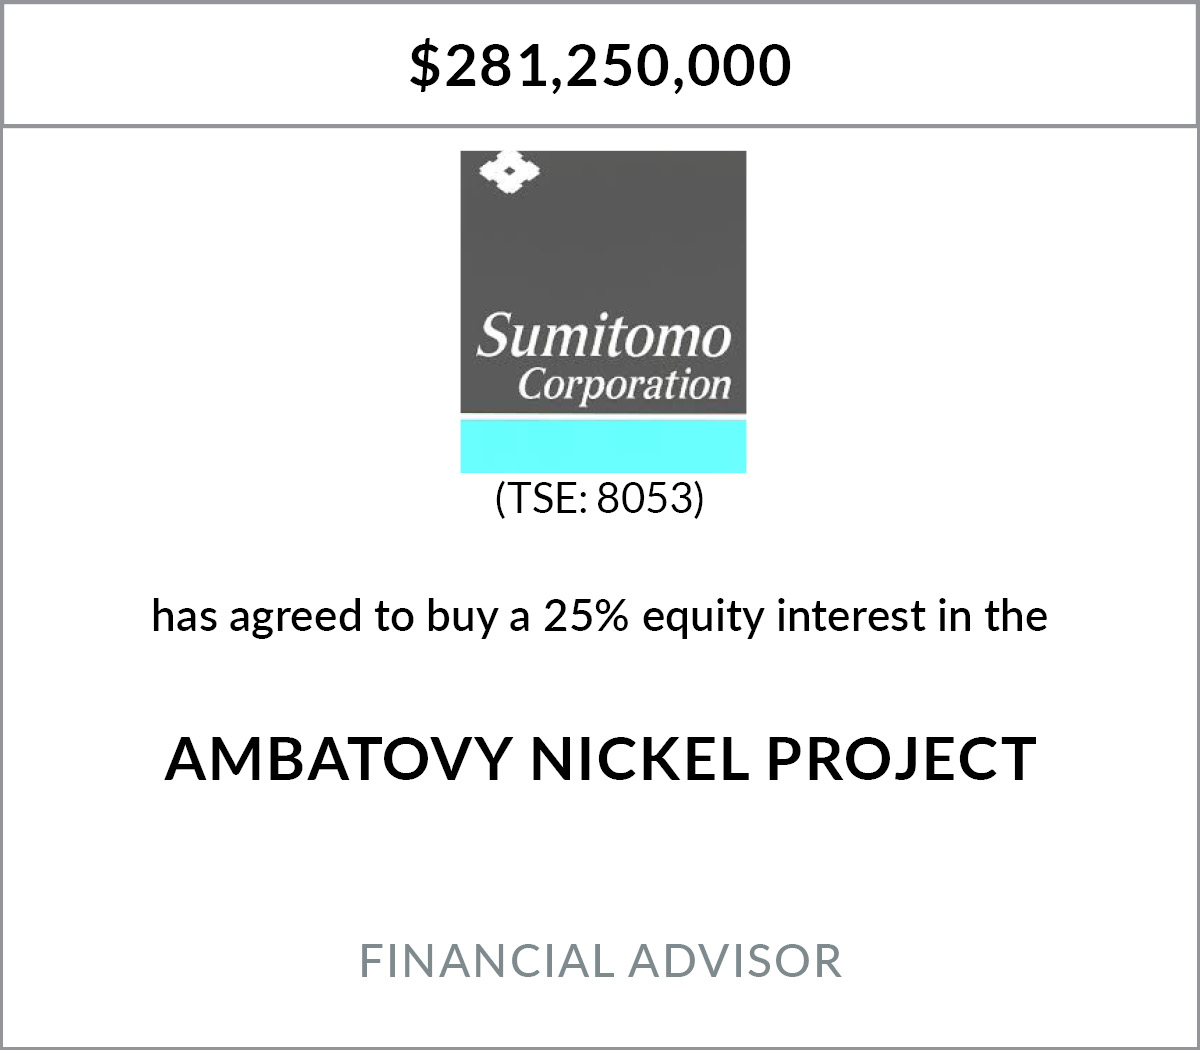 Sumitomo Corporation to Acquire 25% of Ambatovy Project